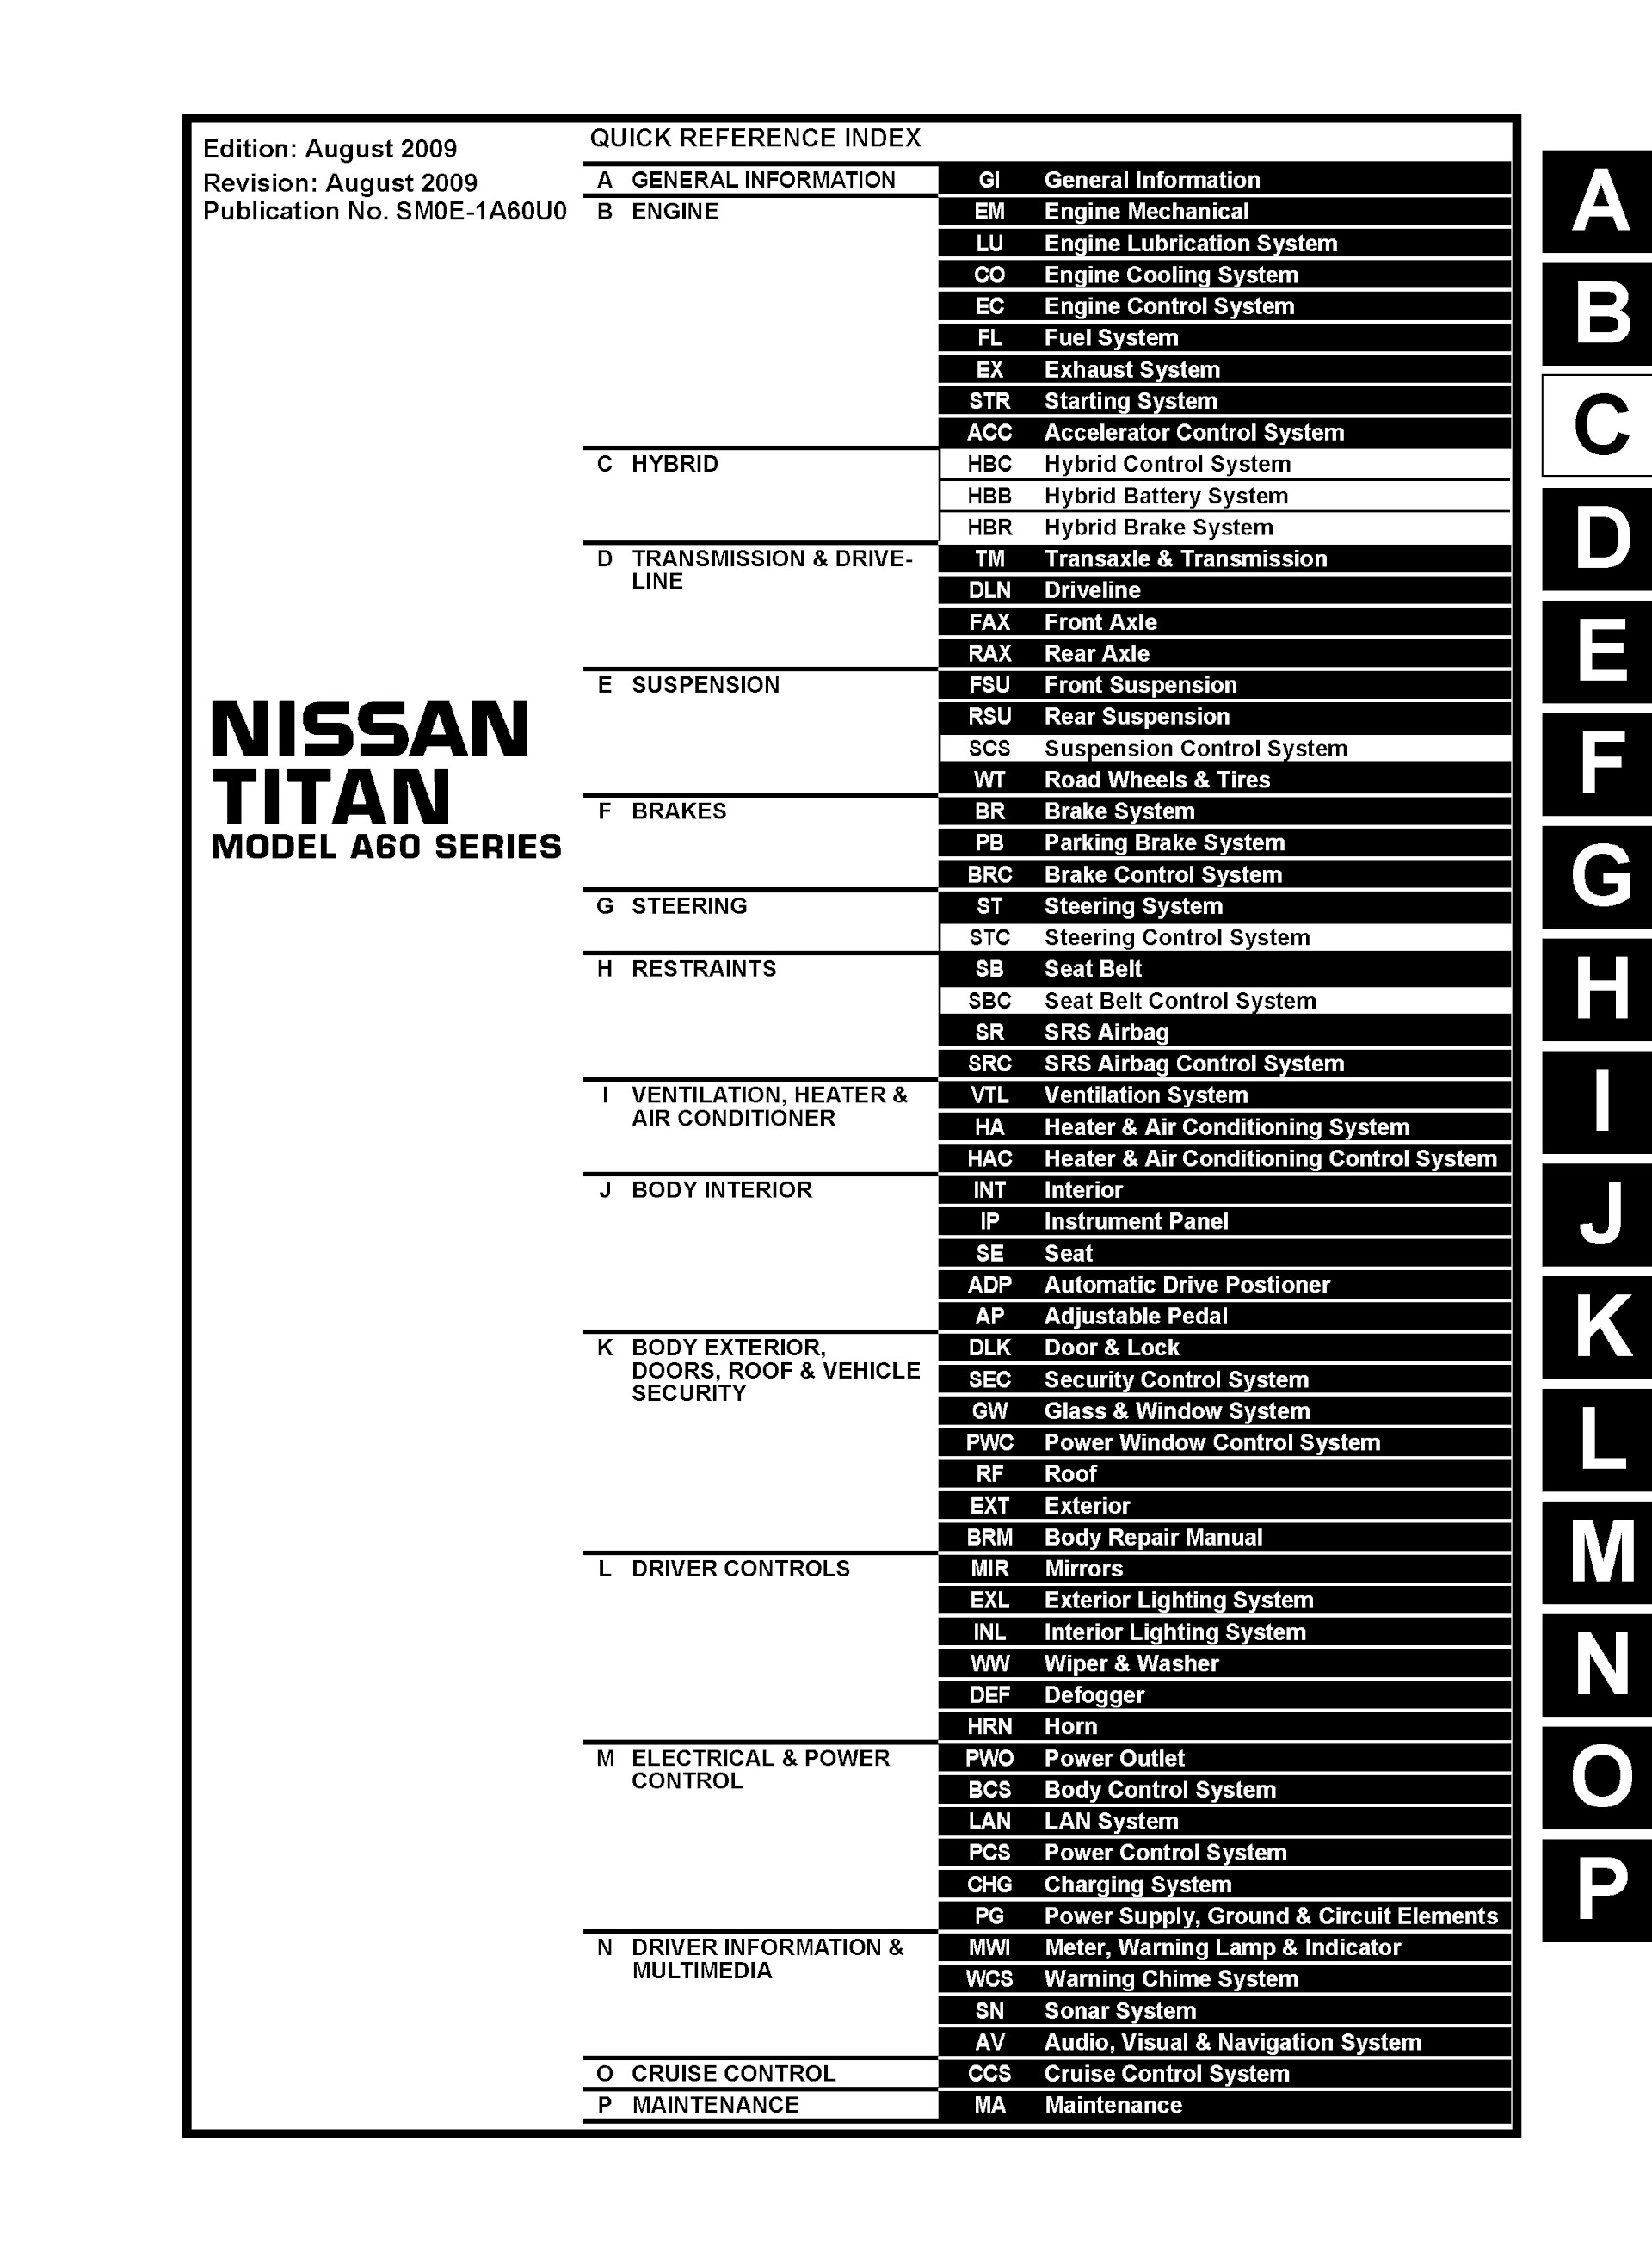 Table of Contents 2010 Nissan Titan Repair Manual Model A60 Series